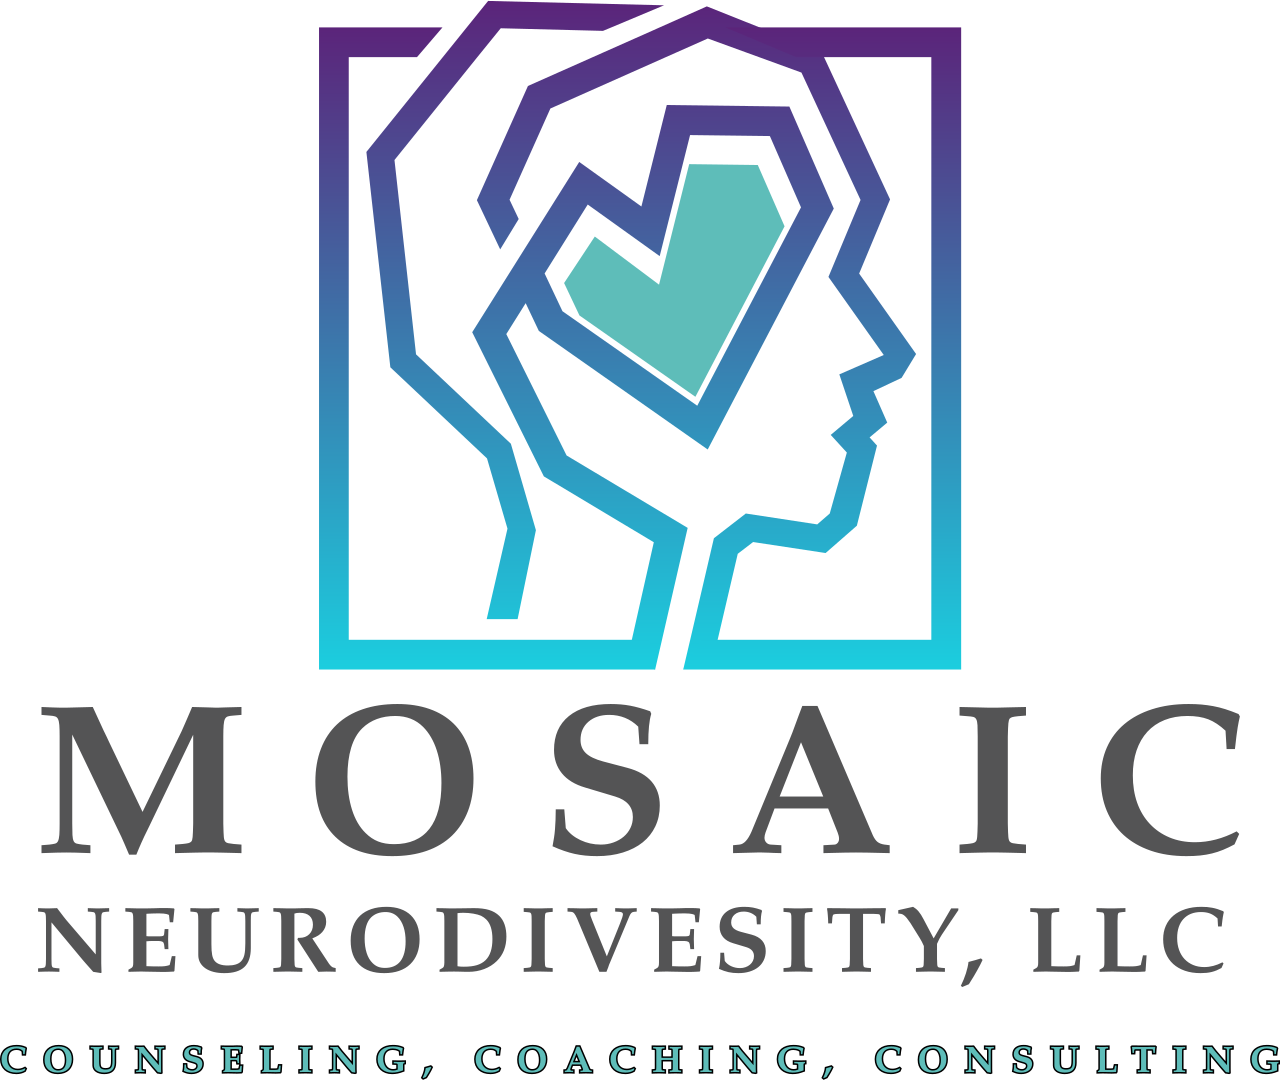 Mosaic's logo